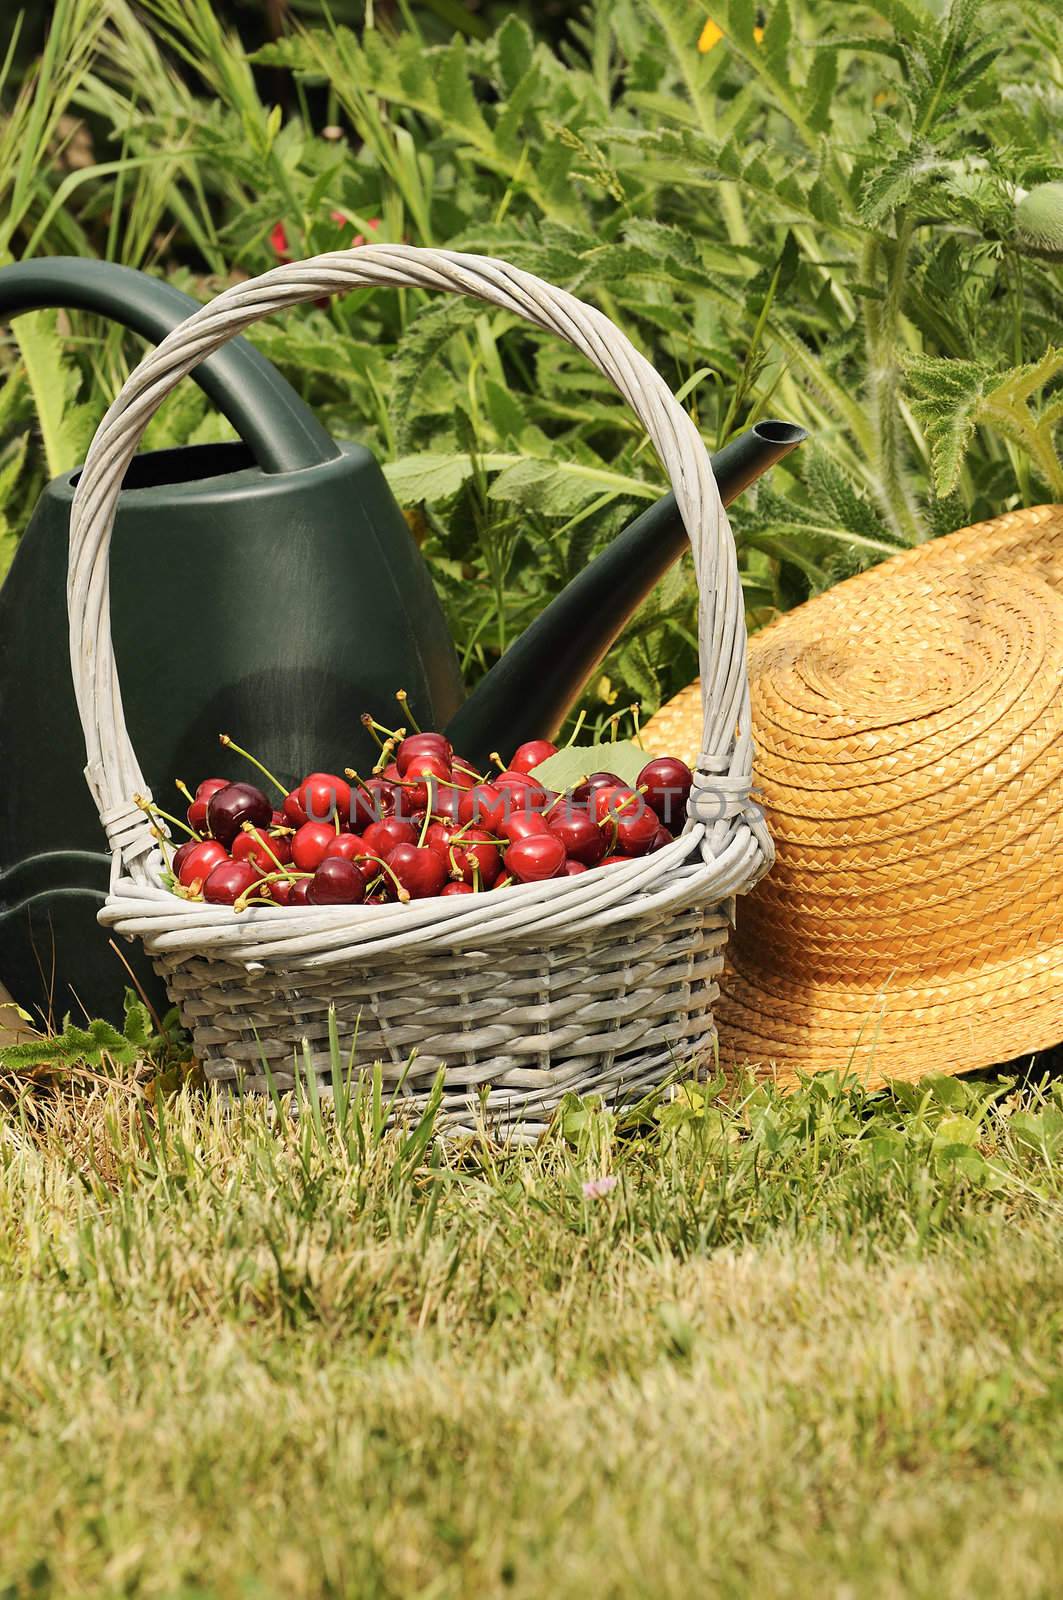 basket of cherries and straw hat in a flower garden